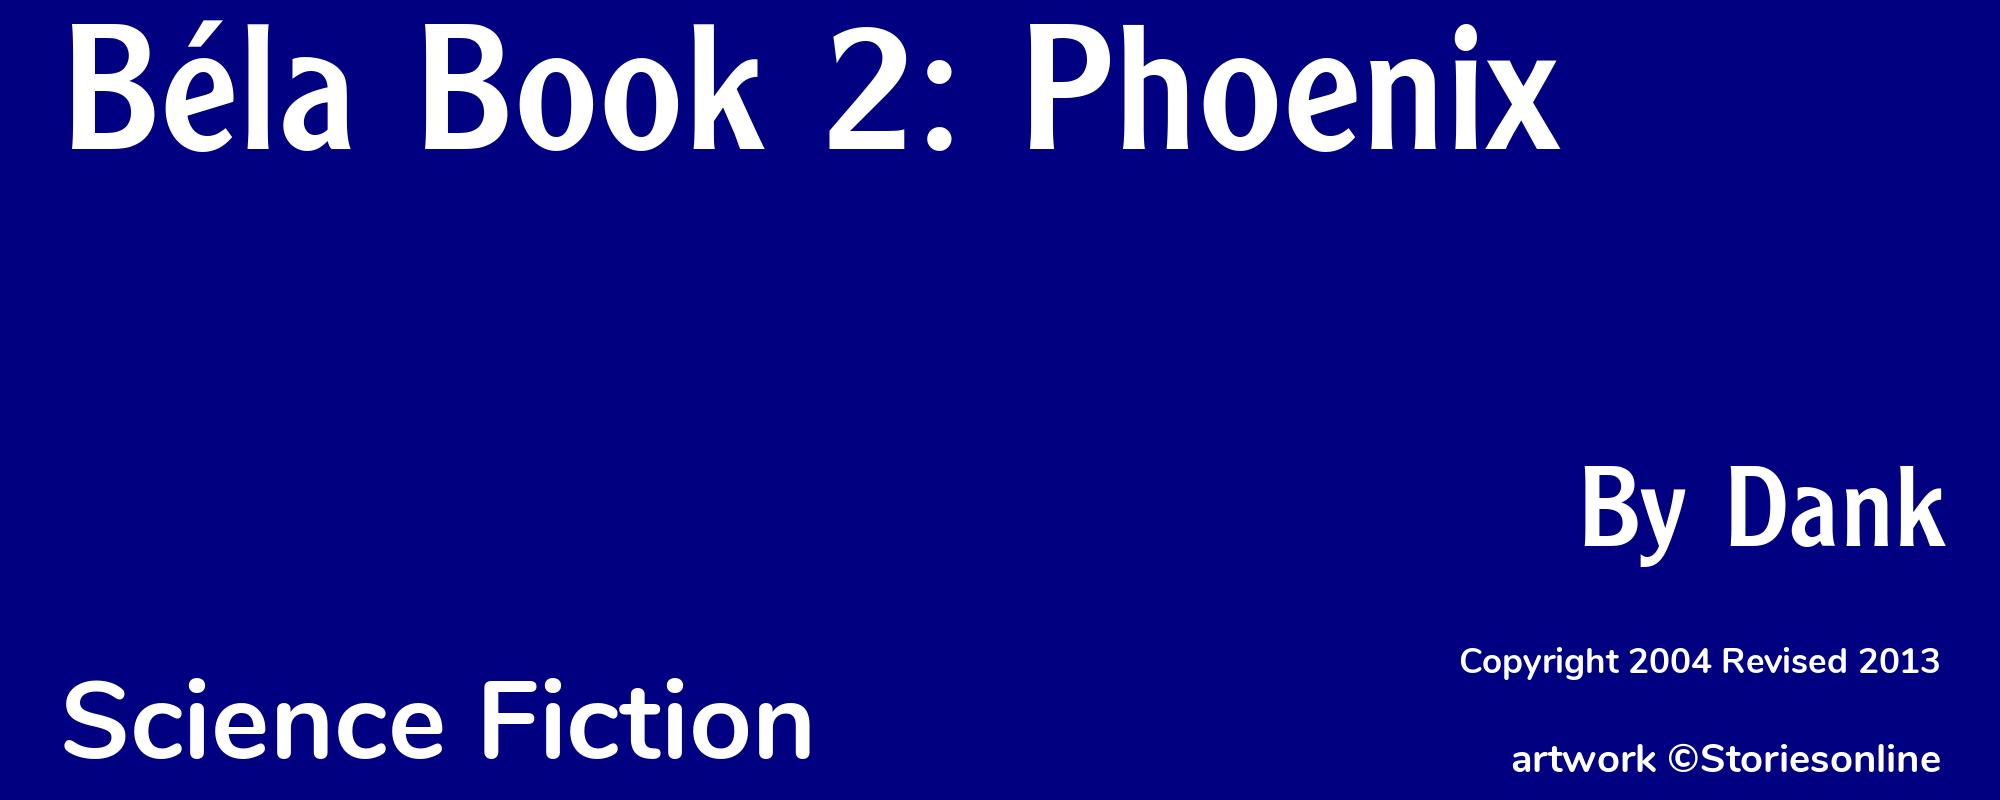 Béla Book 2: Phoenix - Cover